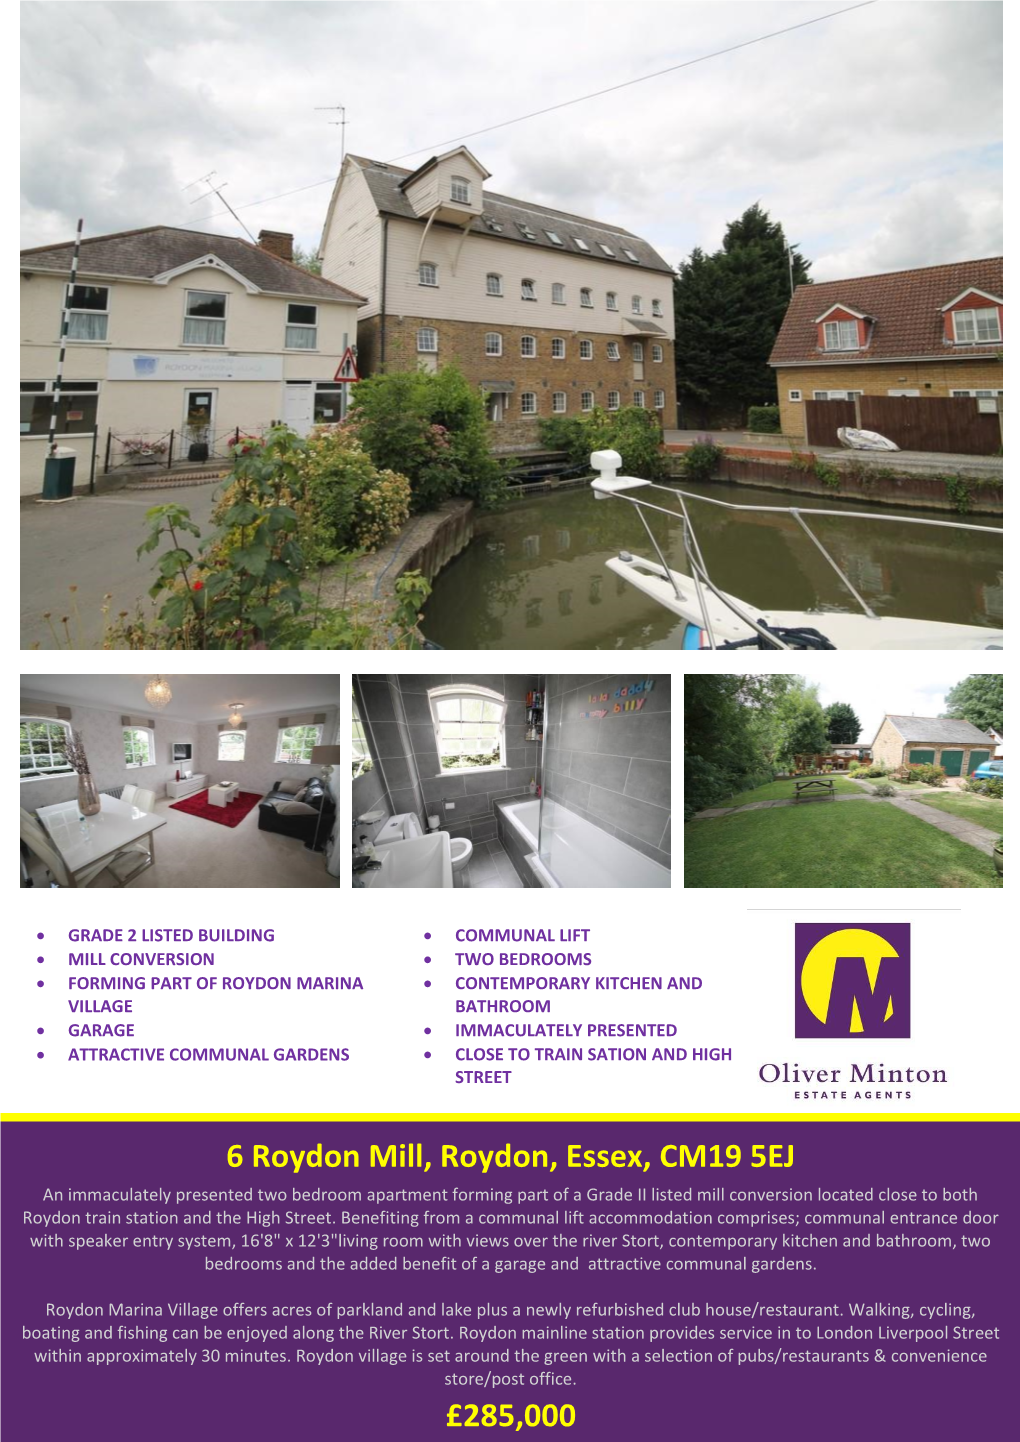 6 Roydon Mill, Roydon, Essex, CM19 5EJ £285,000